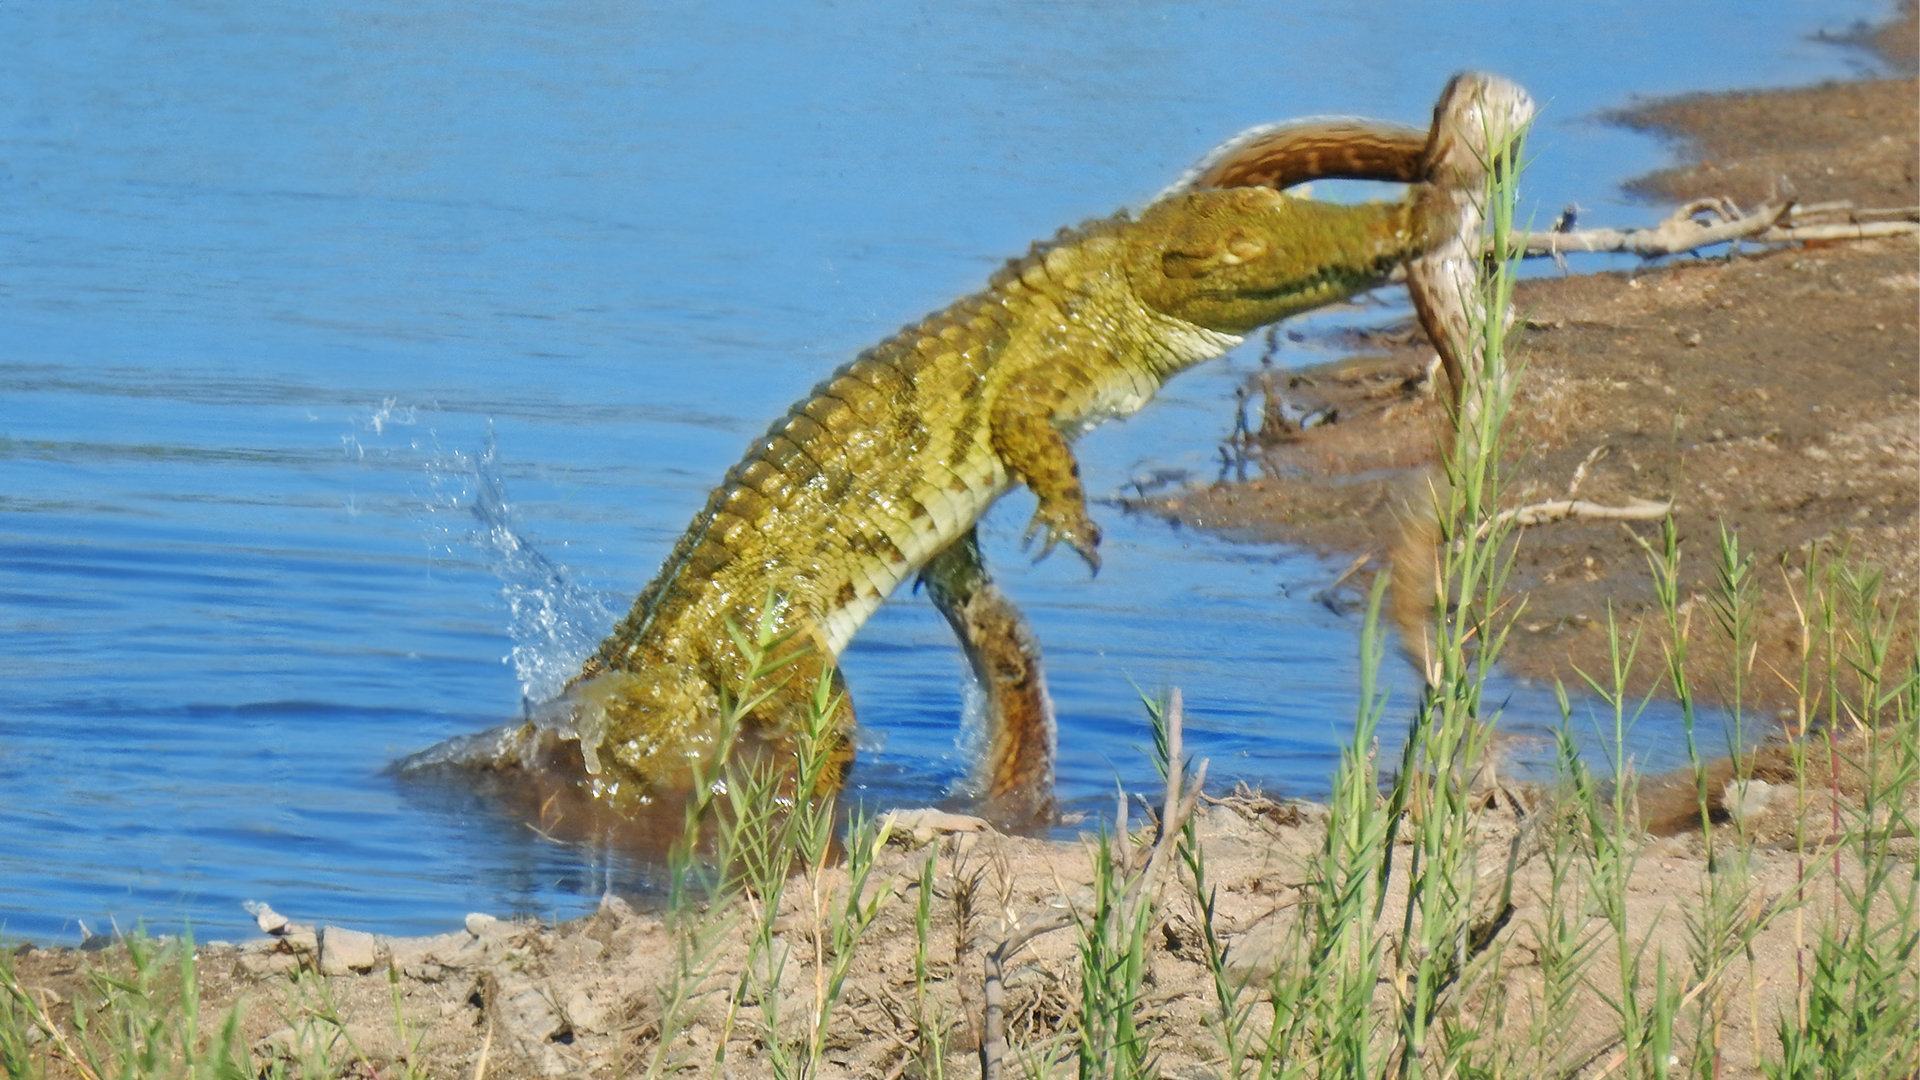 Crocodile Attacks and Kills Huge Snake